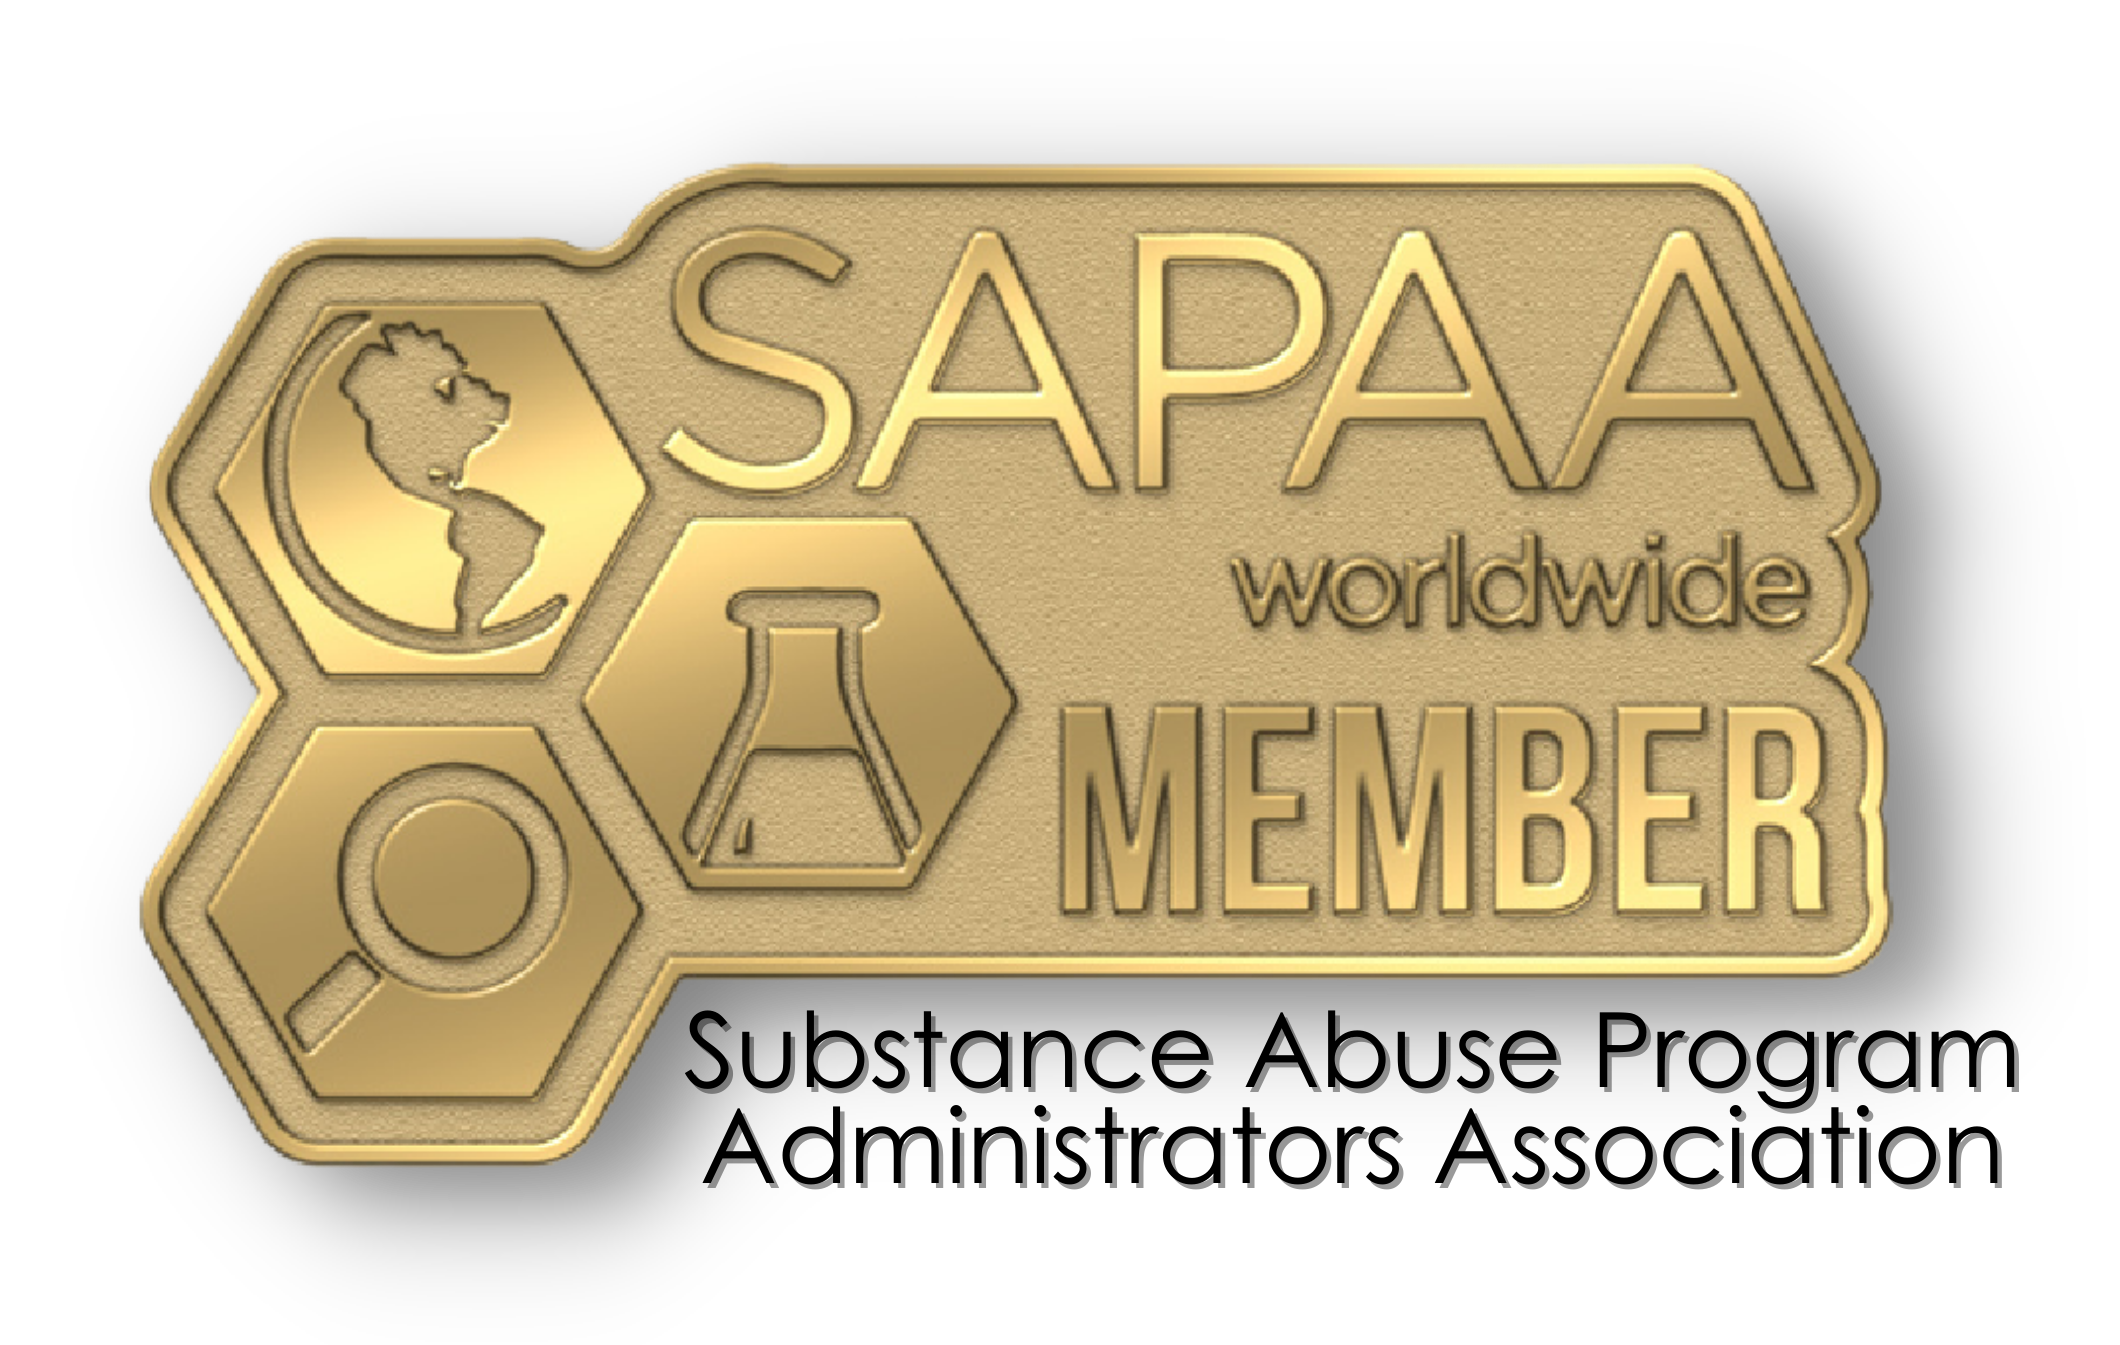 Proud SAPAA Worldwide Member